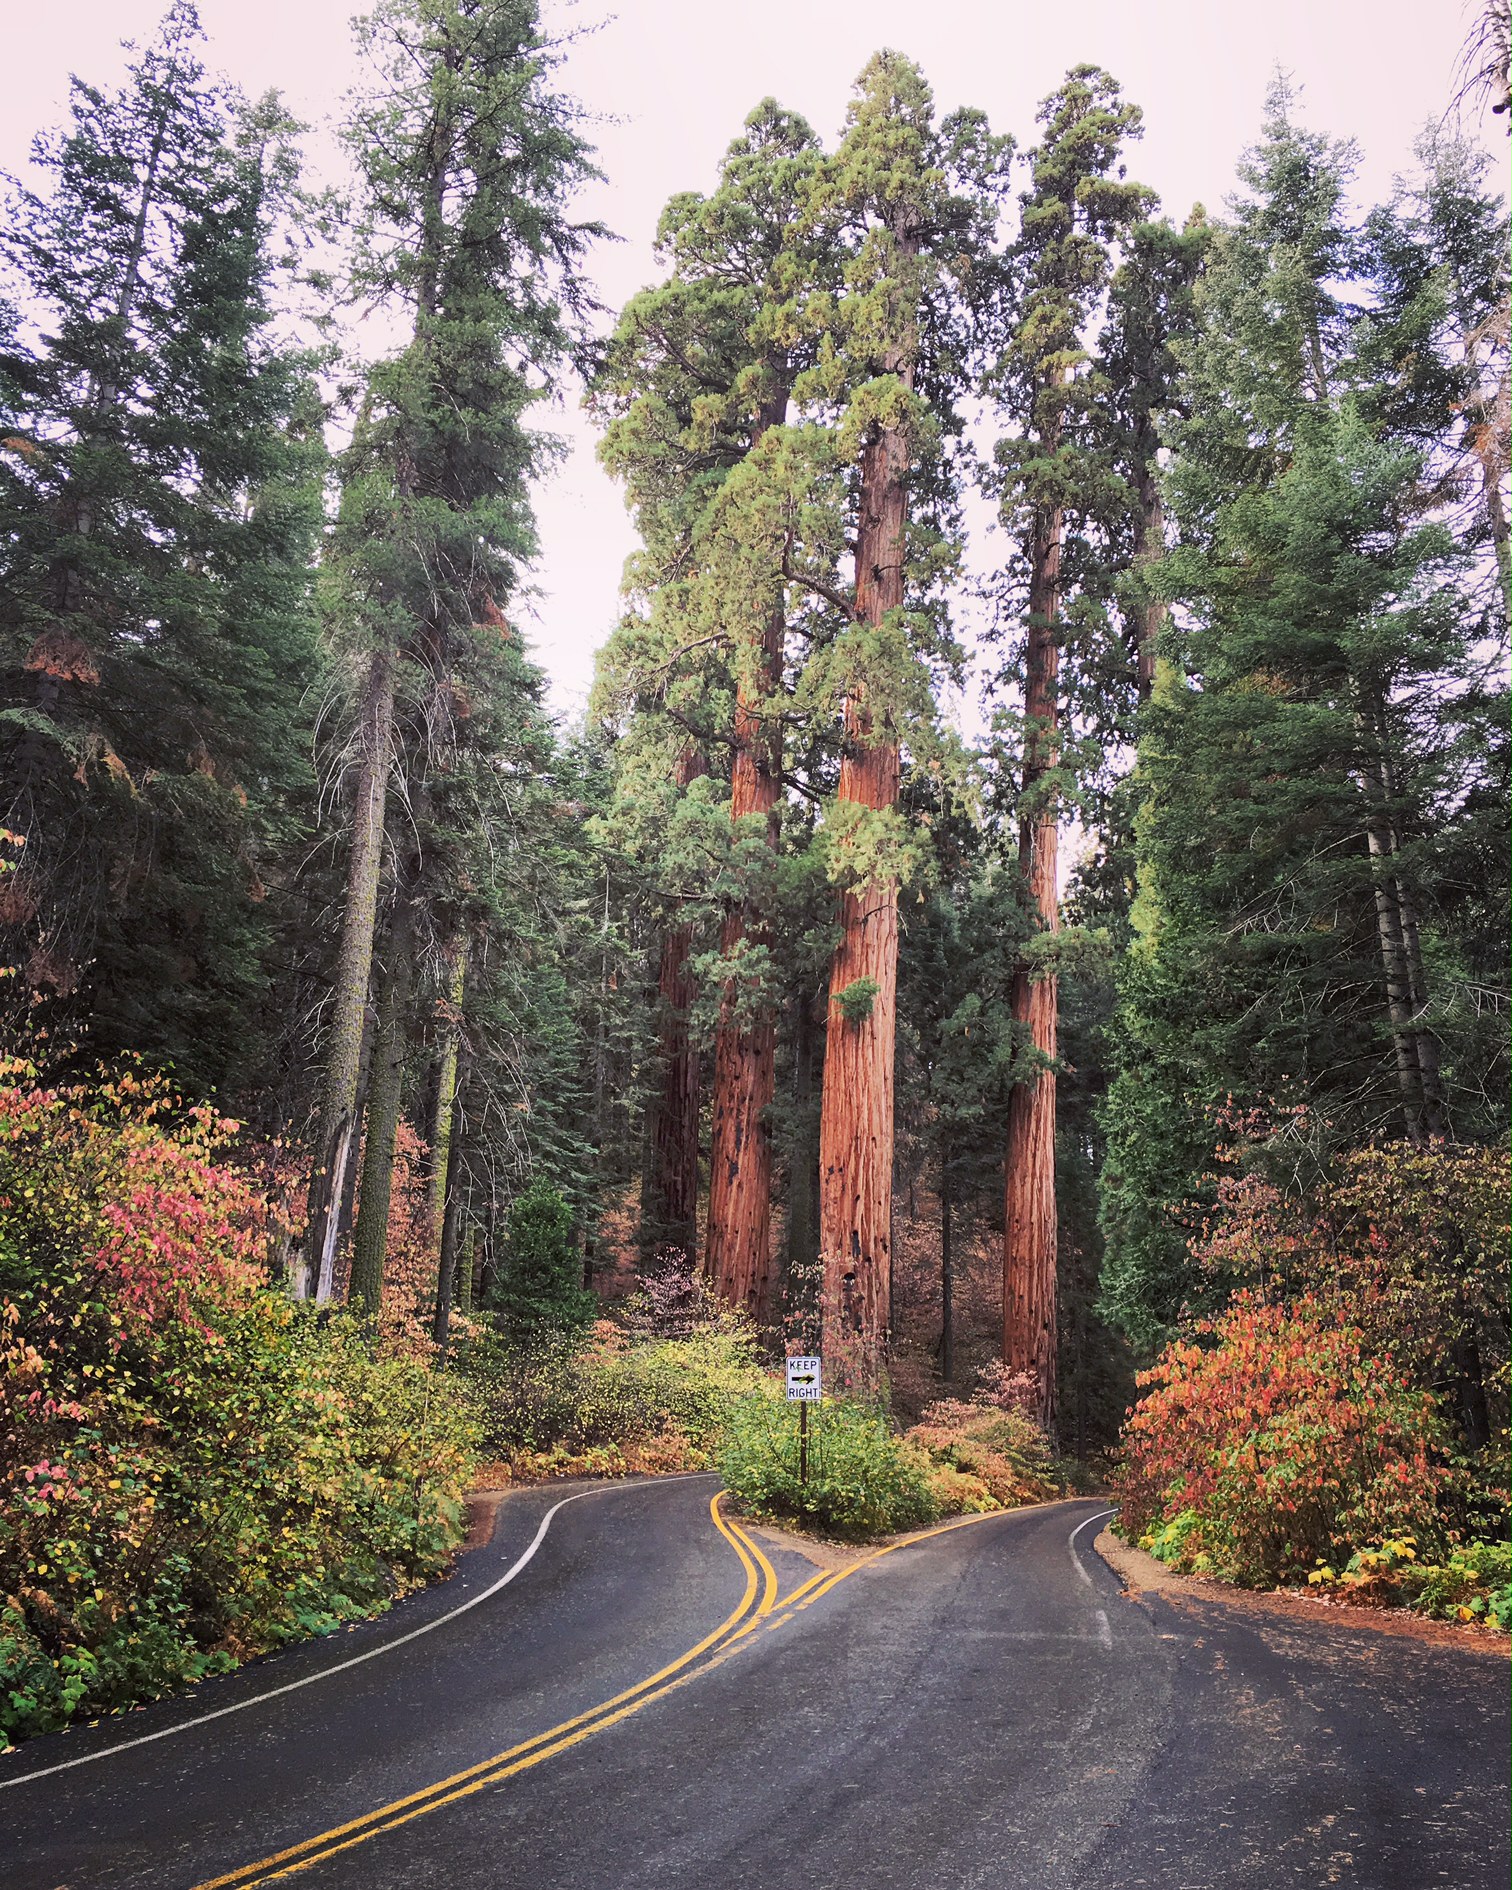 The Sequoias